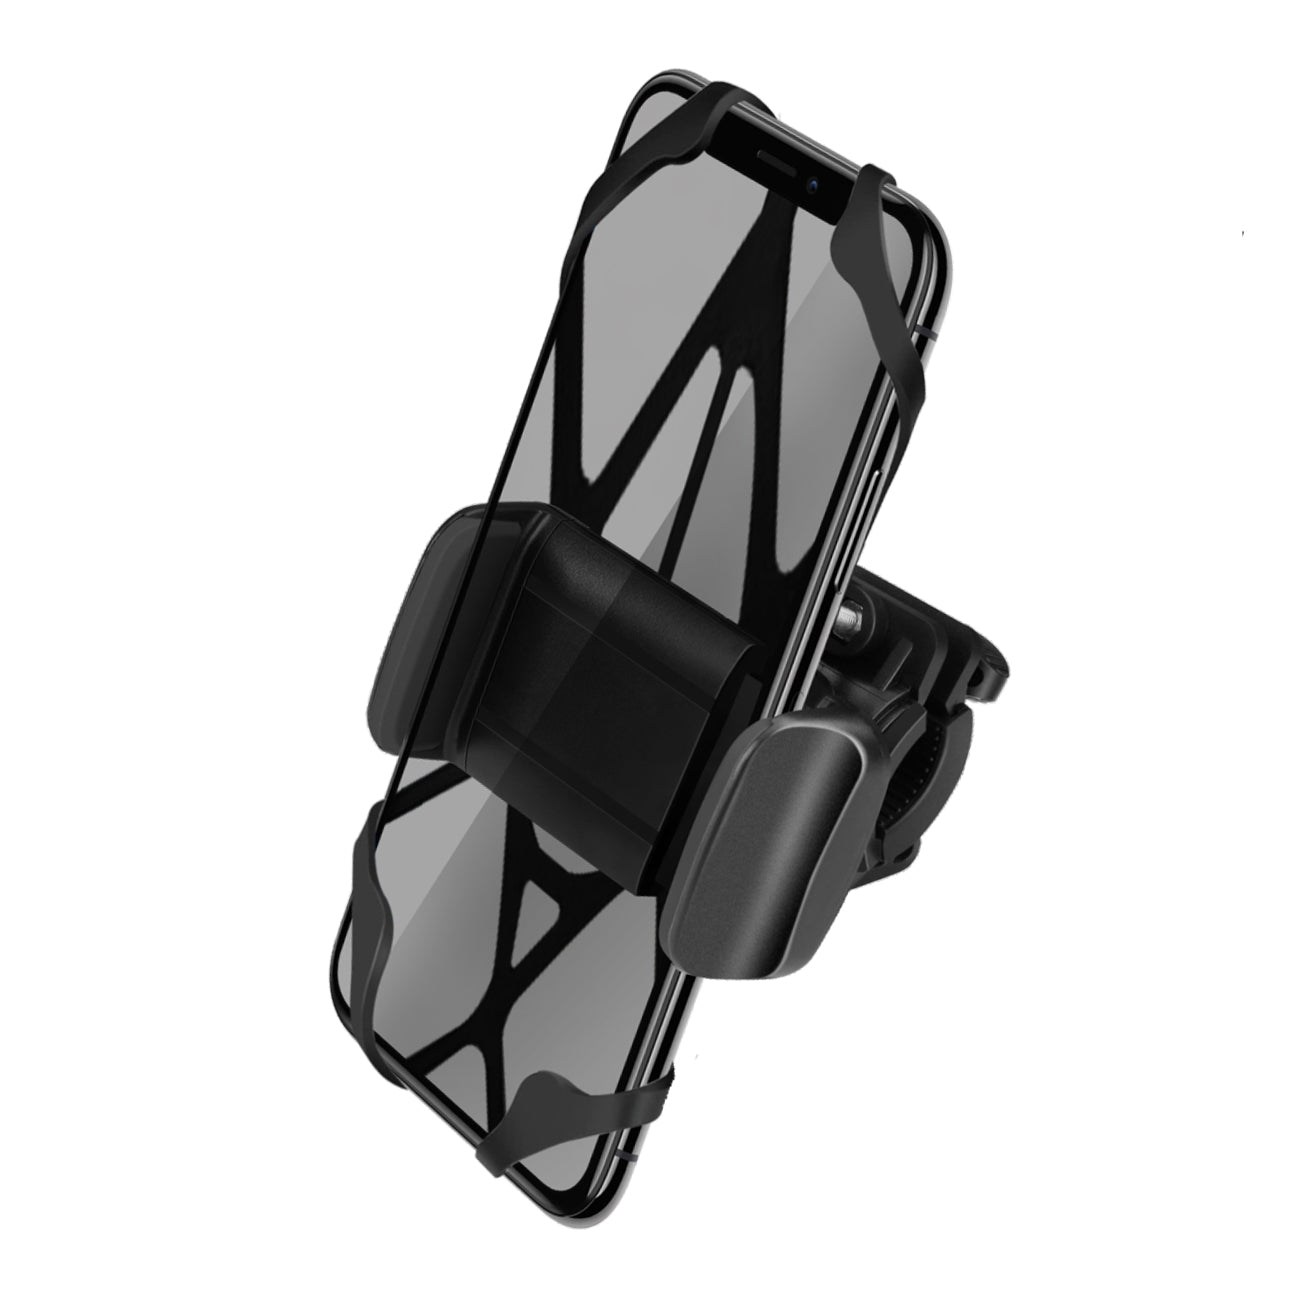 Reiko Universal Bicycle Phone Mount Adjustable Fits Cradle Clamp Handlebar Holder